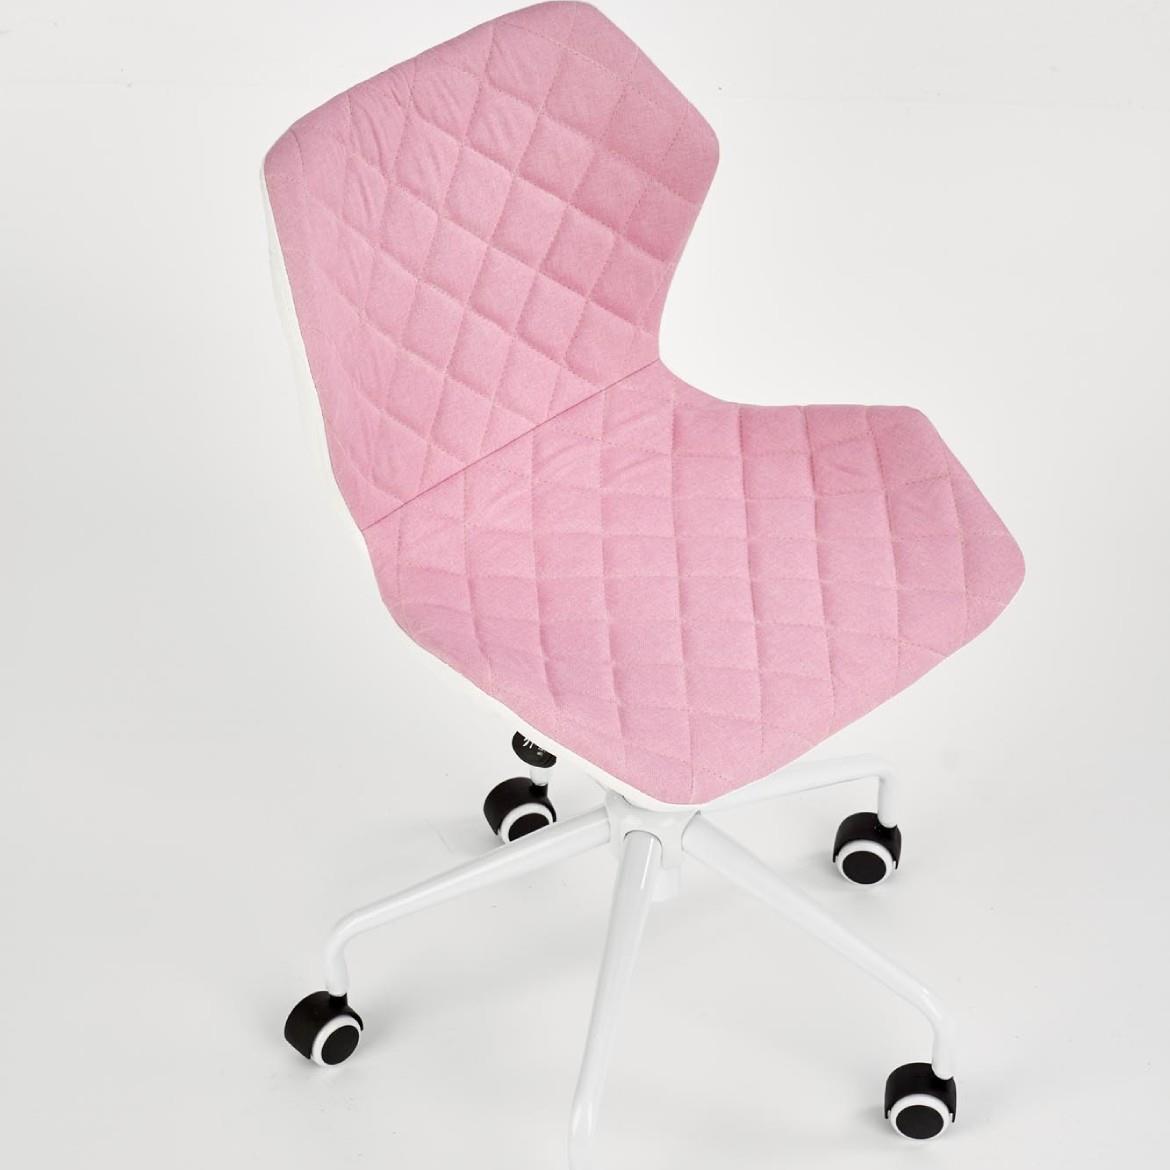 Matrix 3 kancelarijska stolica 48x57x88 cm roze/bela